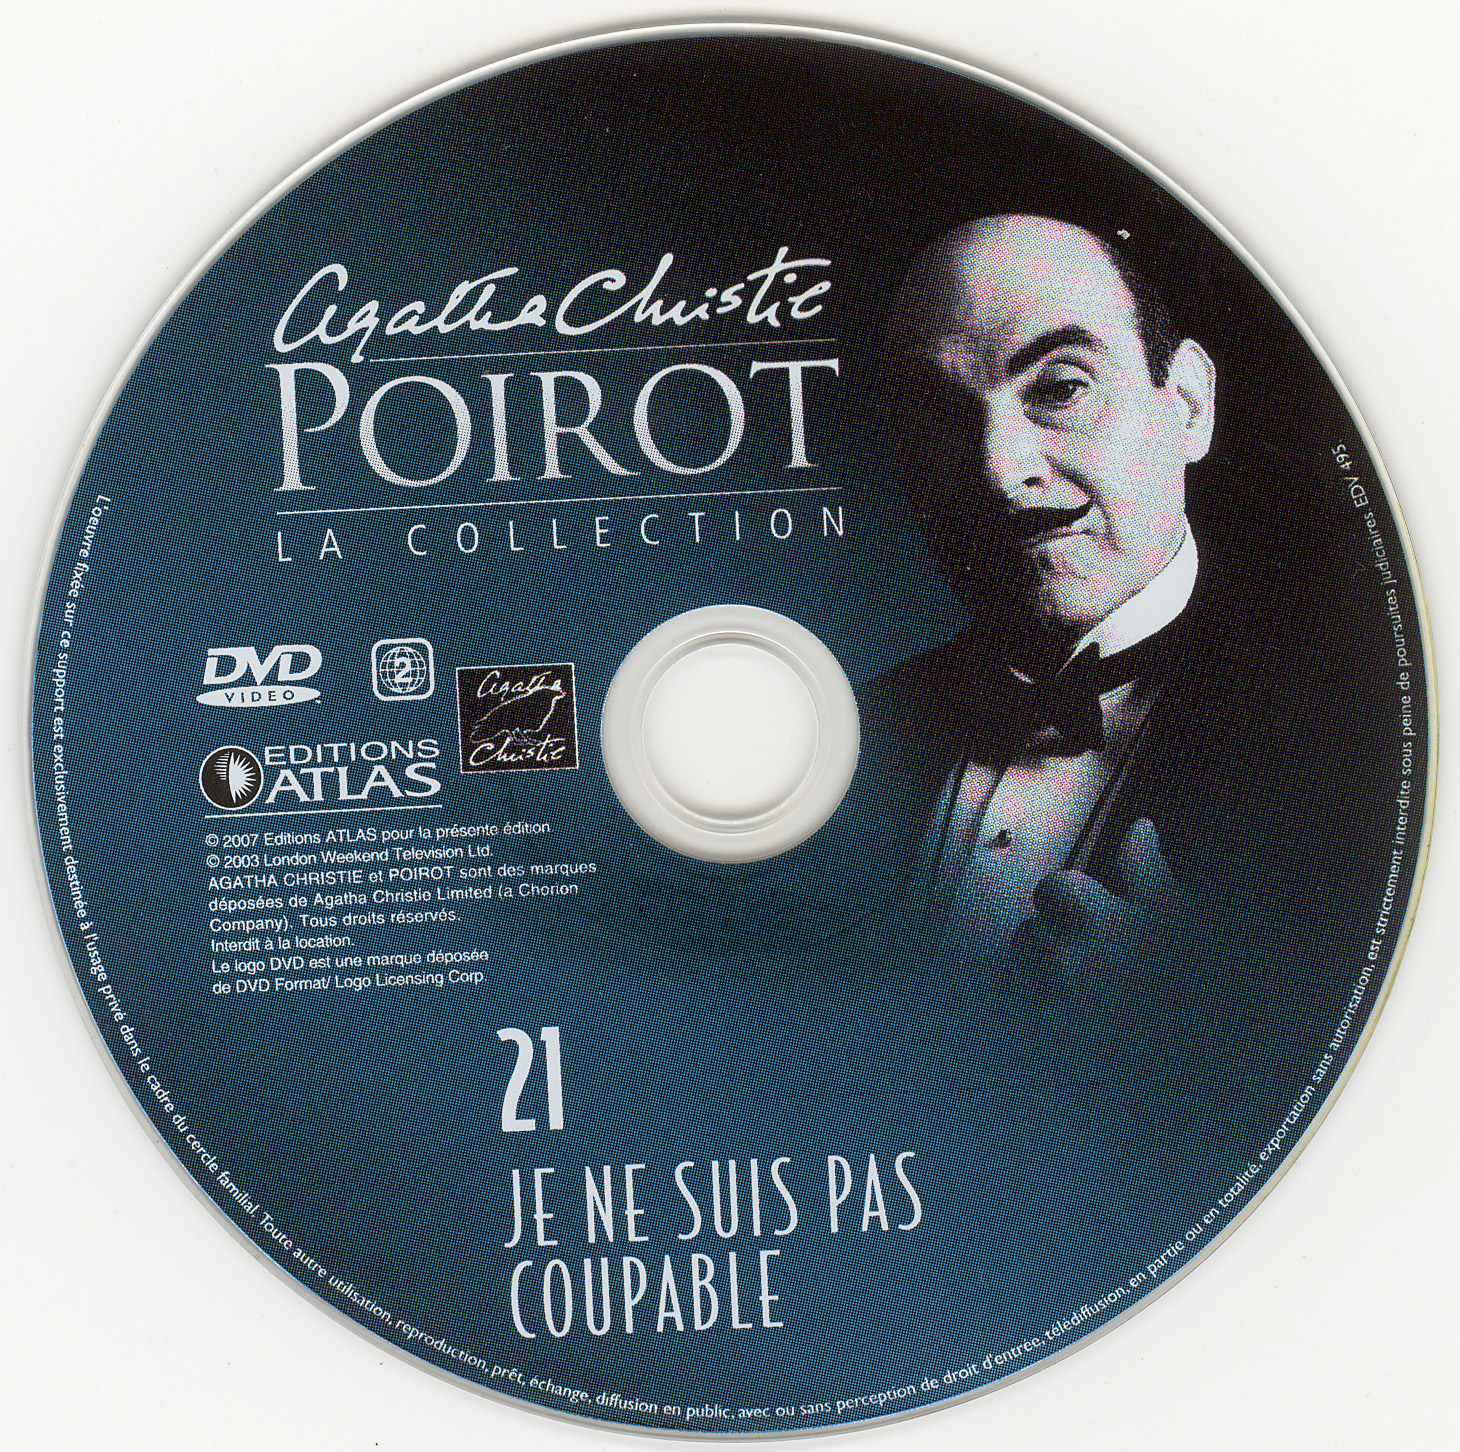 Hercule Poirot vol 21